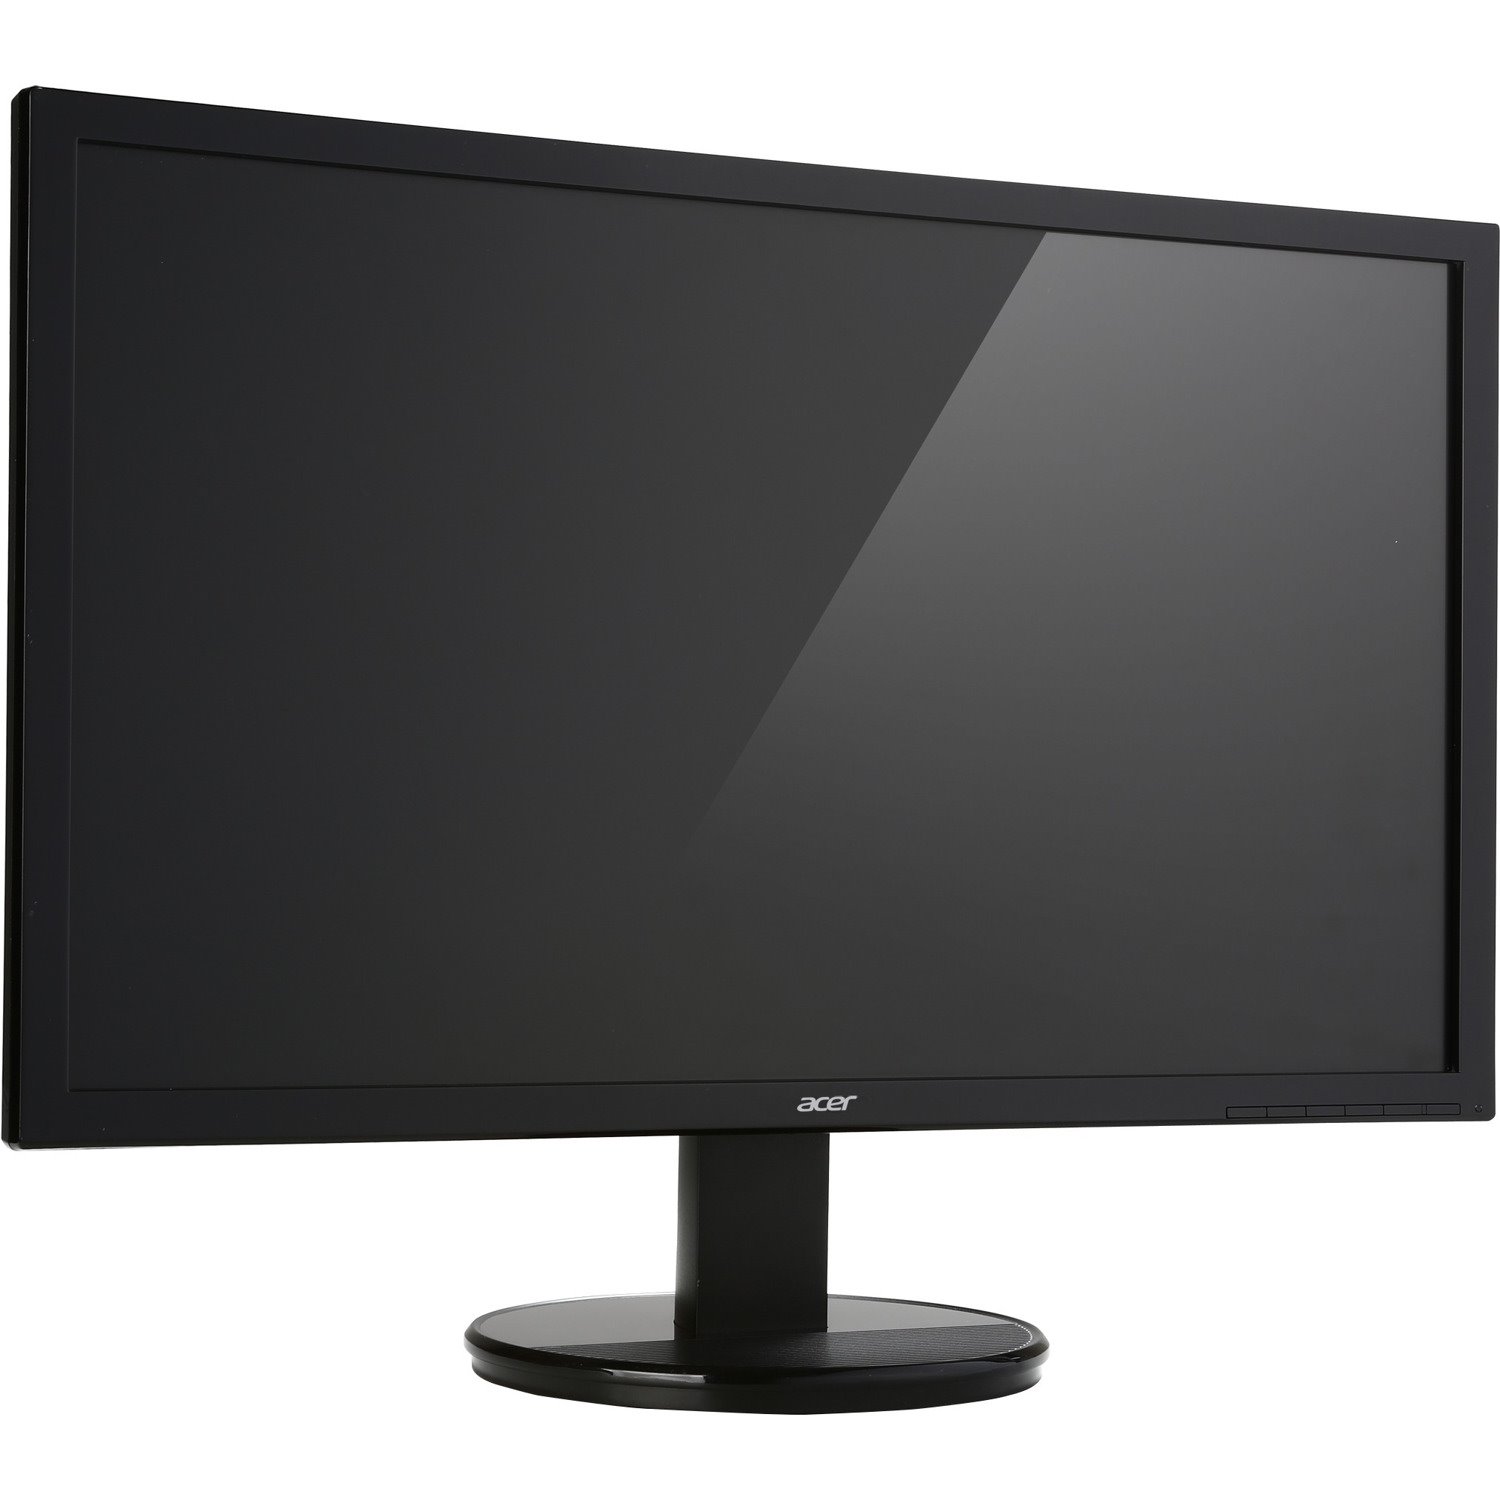 Acer K222HQL 21.5" LED LCD Monitor - 16:9 - 5ms - Free 3 year Warranty